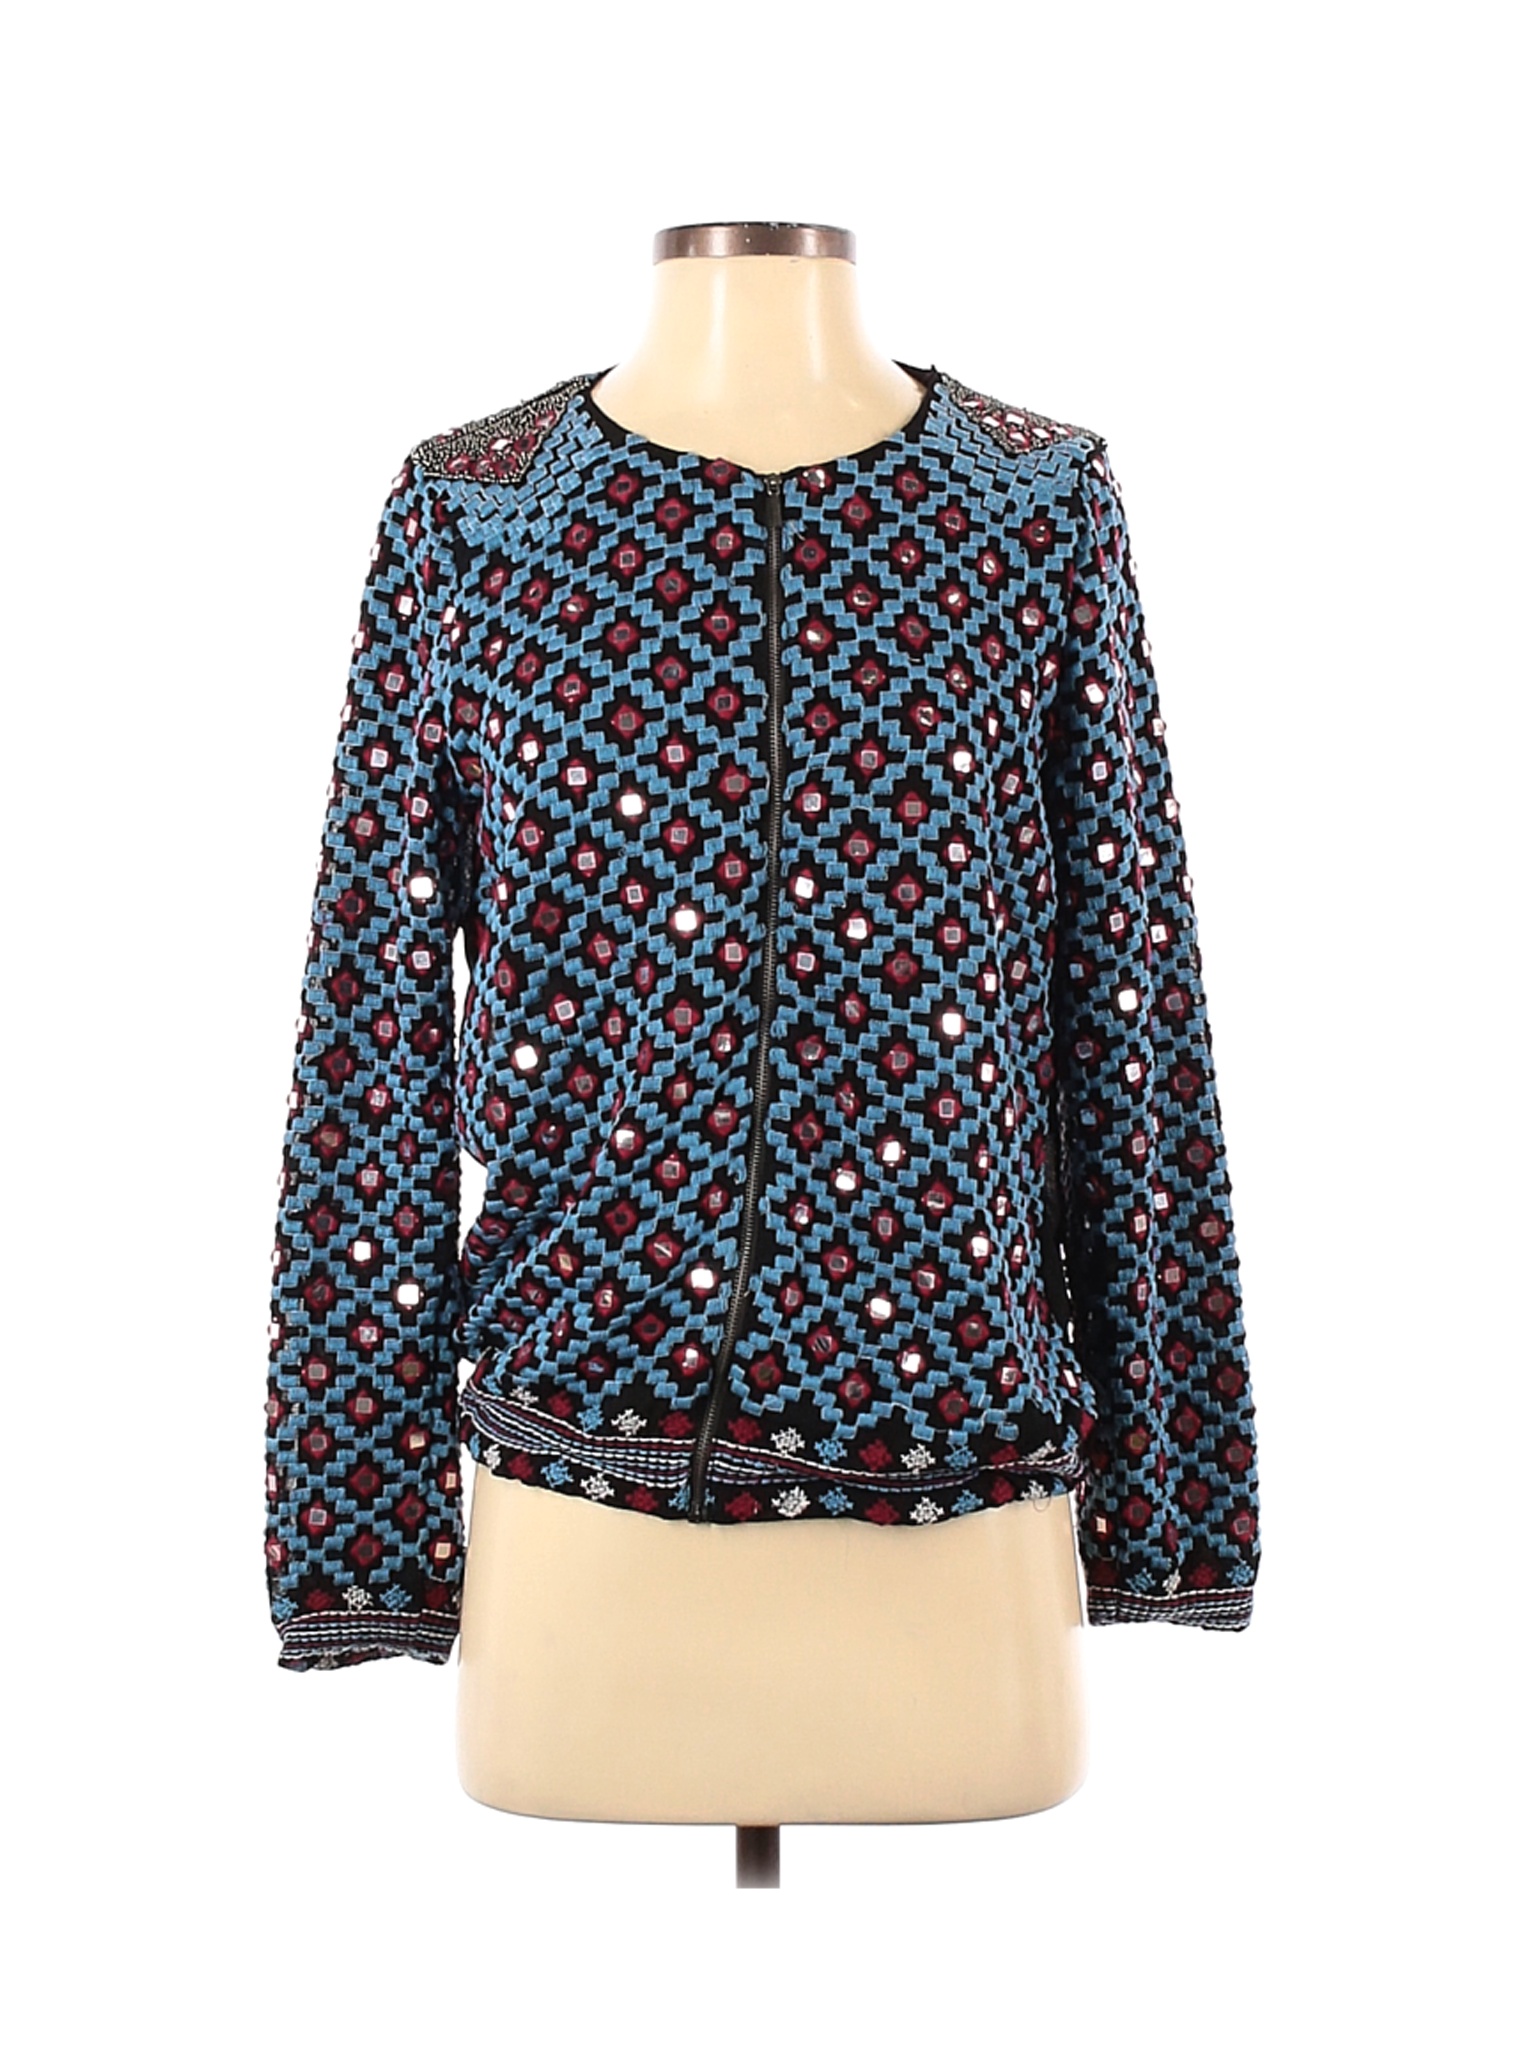 Trafaluc by Zara Women Blue Jacket S | eBay